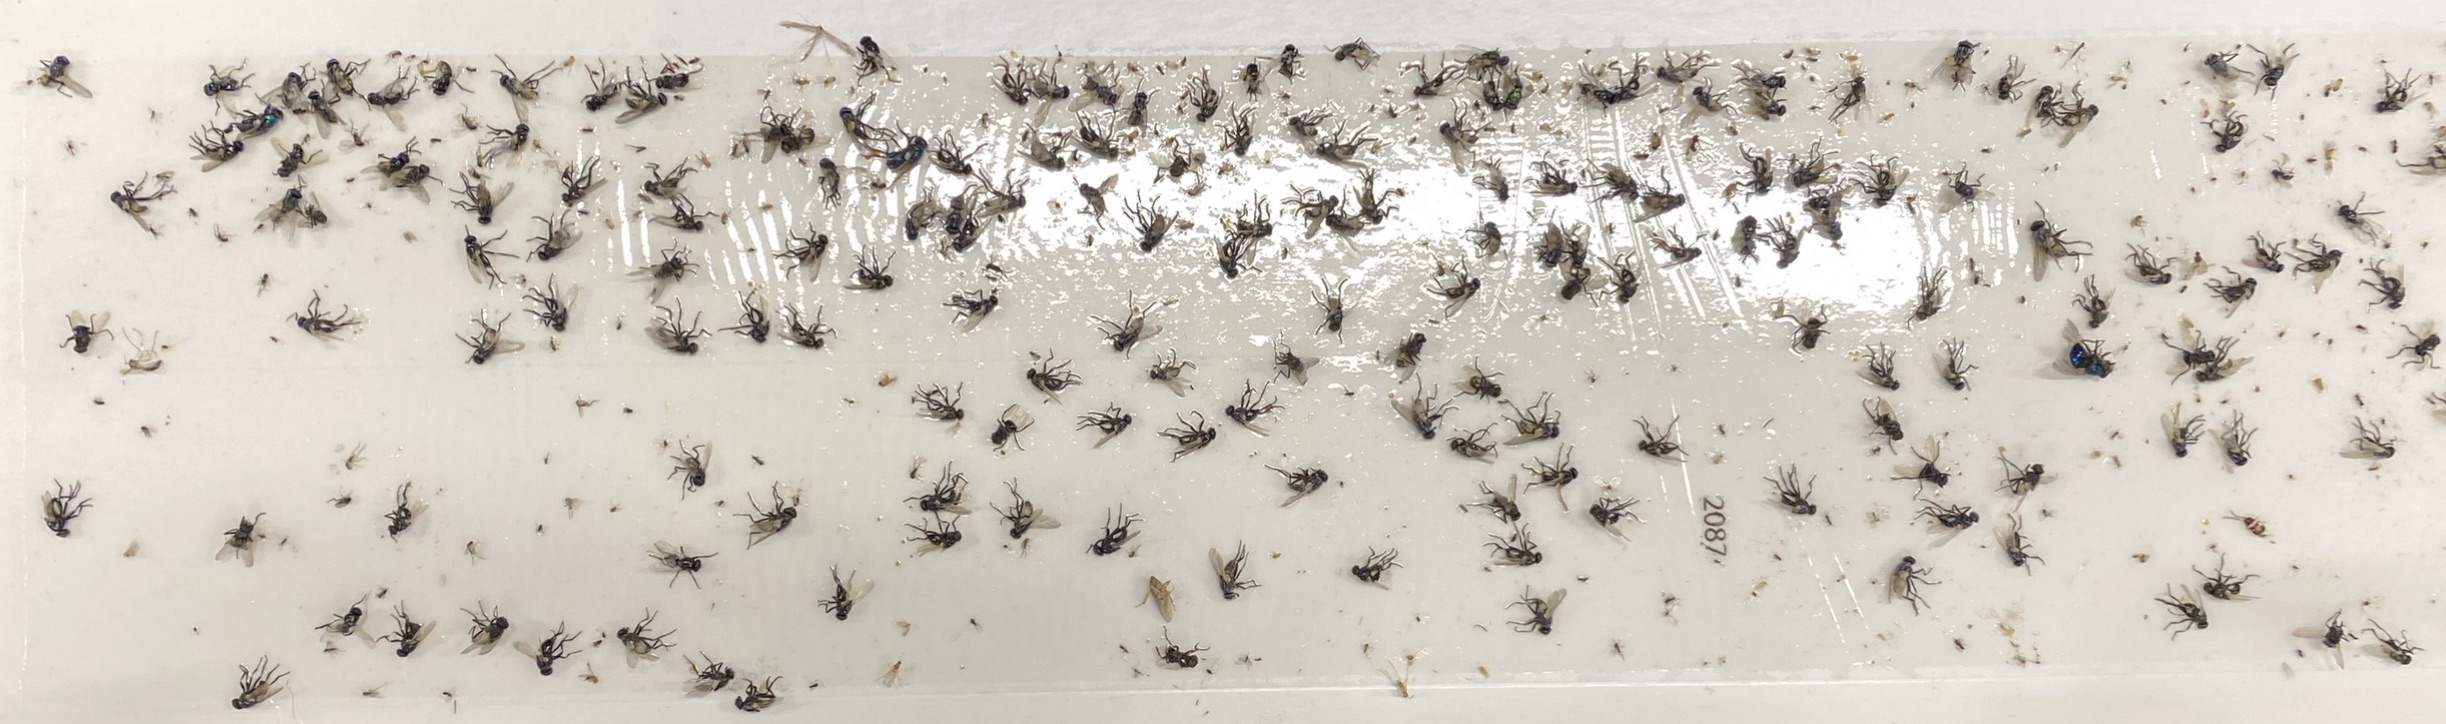 House Flies Blow Flies Humpbacked flies scuttle Pest Control Exterminator Dahlonega Georgia Cumming Cleveland